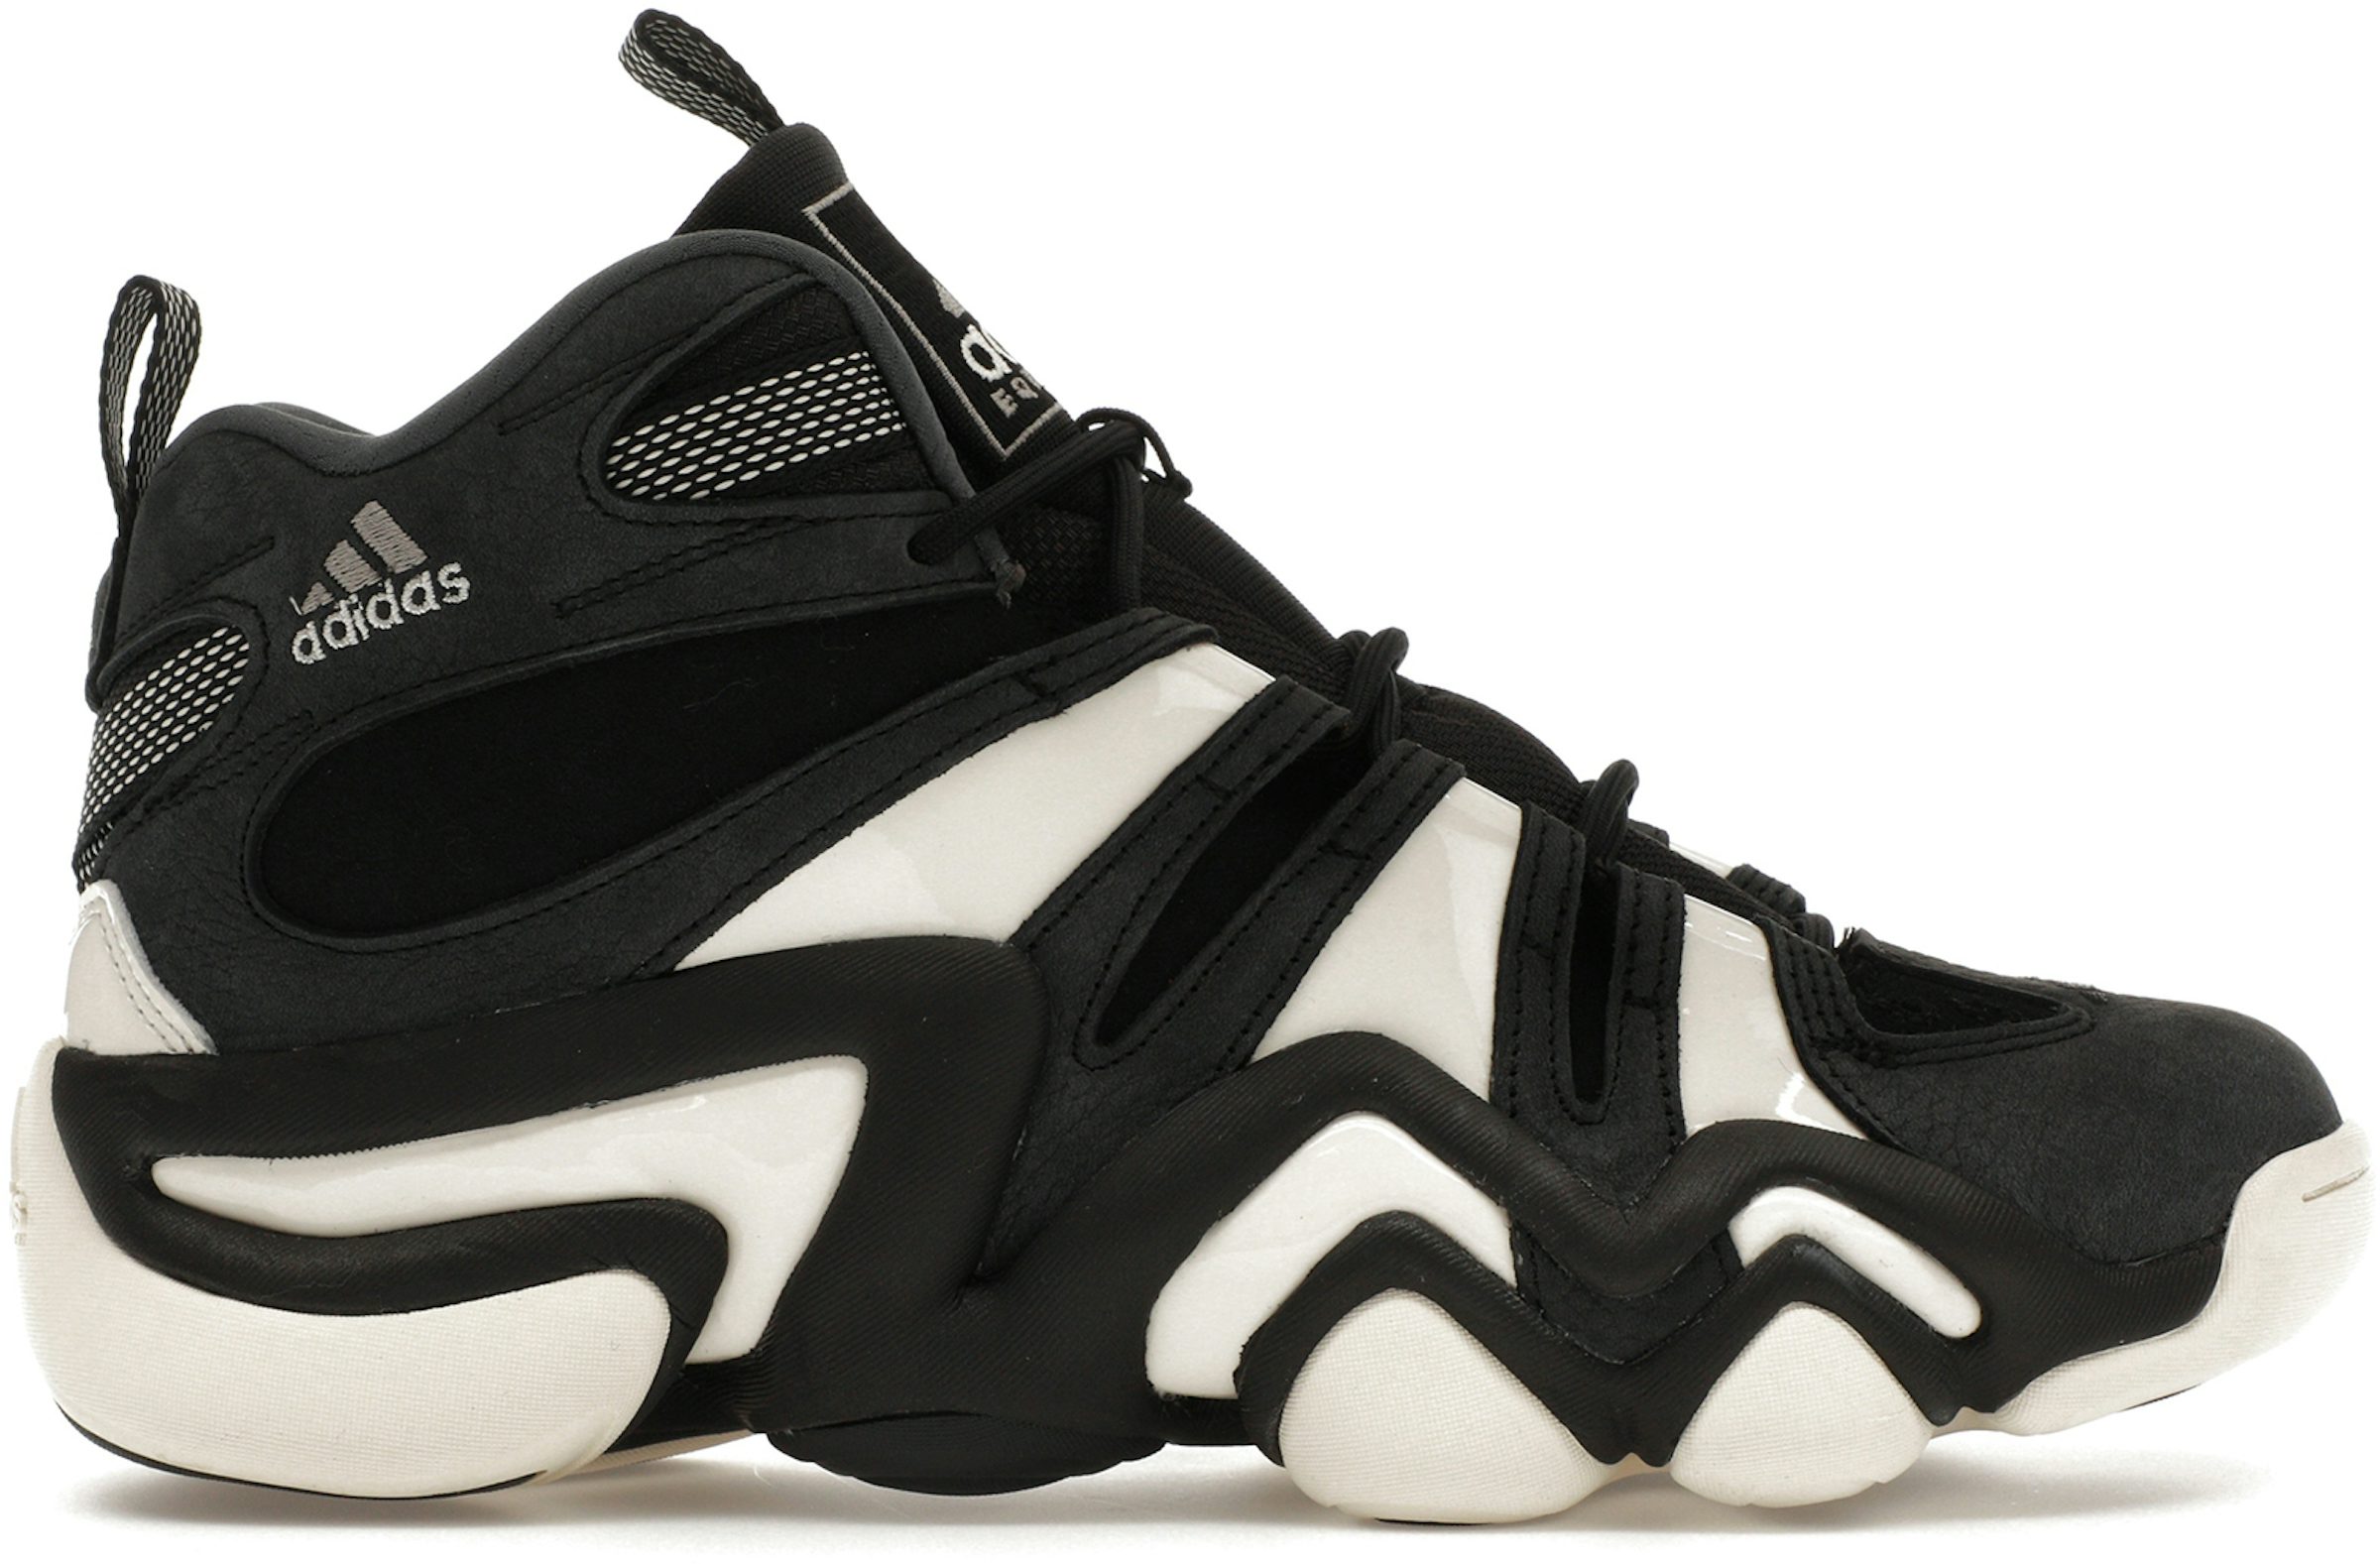 adidas Basketball - Upcoming 2011/2012 Releases 